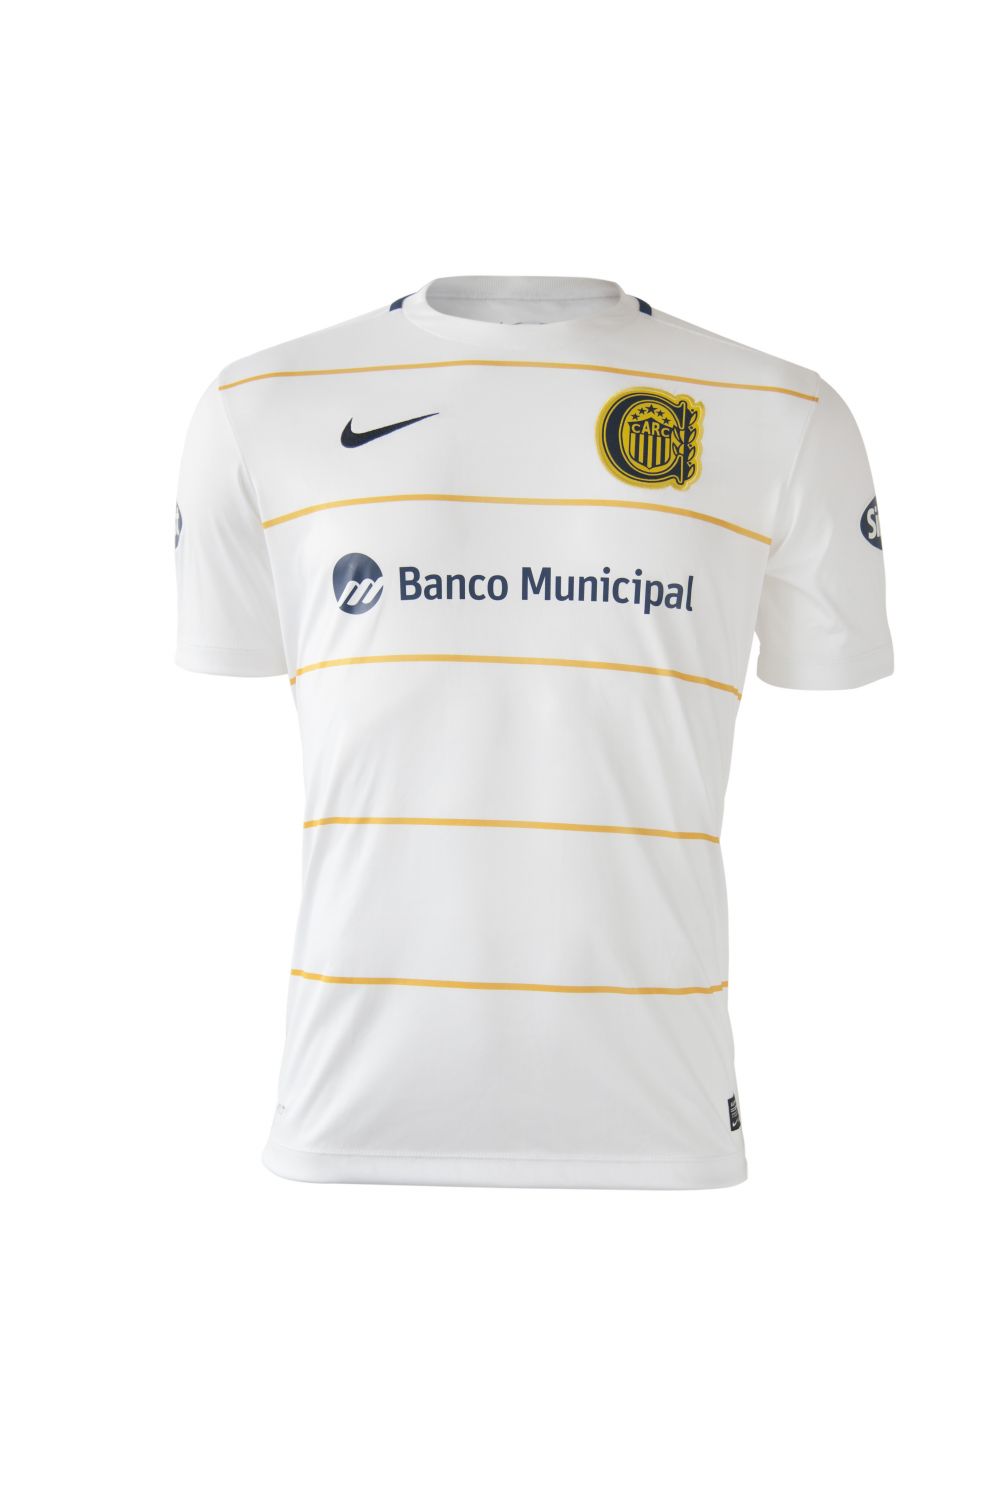 Huérfano a nombre de vestirse Camiseta Away Rosario Central Nike 2015 - Marca de Gol